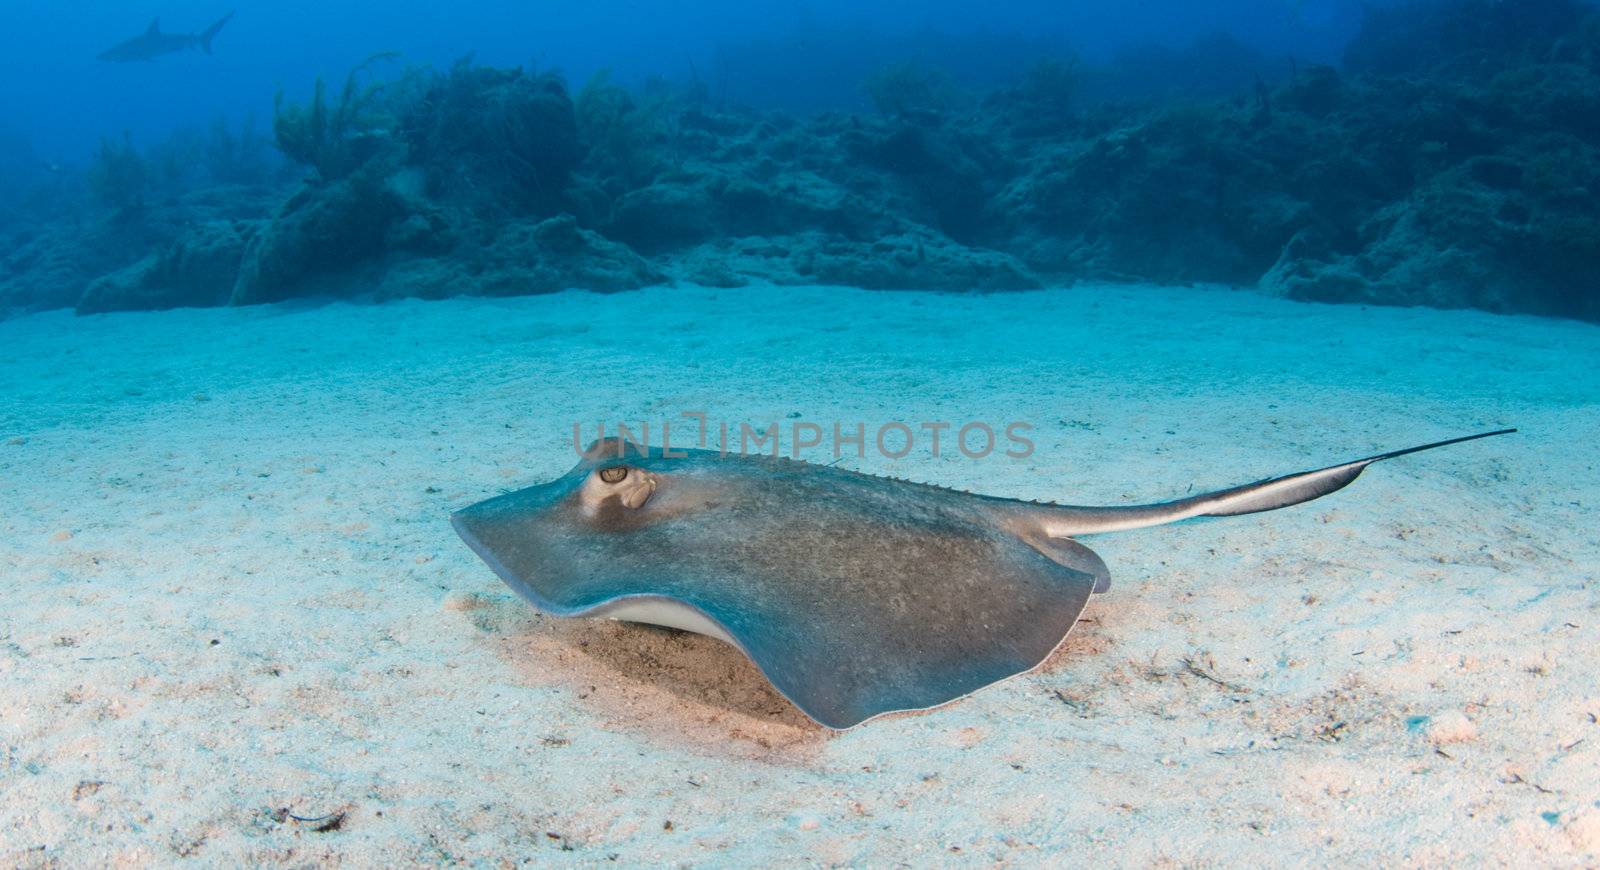 Swimming Sting Ray by Naluphoto